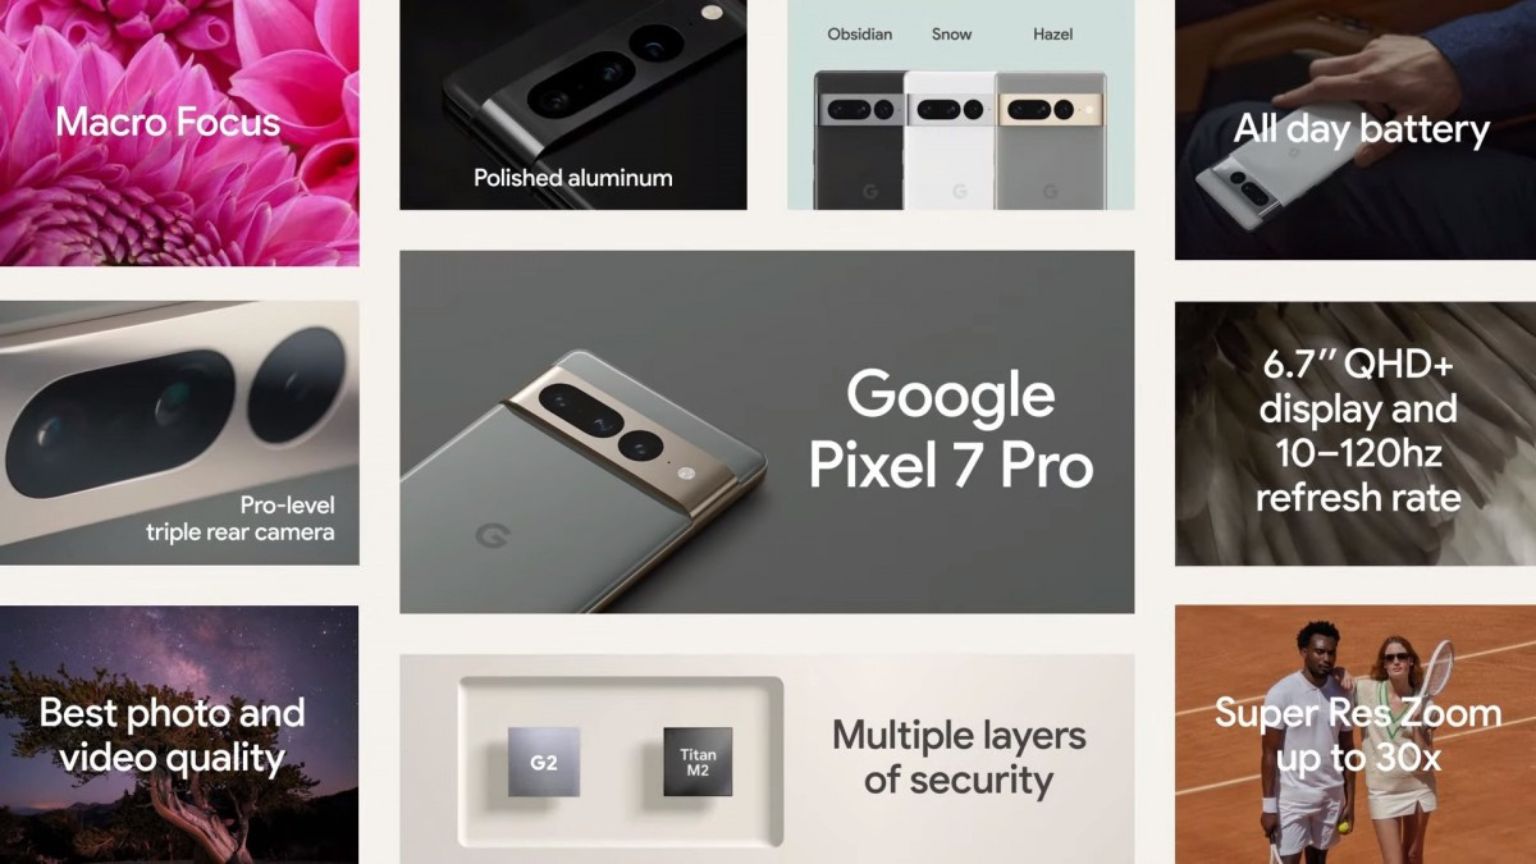 Google Pixel 7 Pro specs